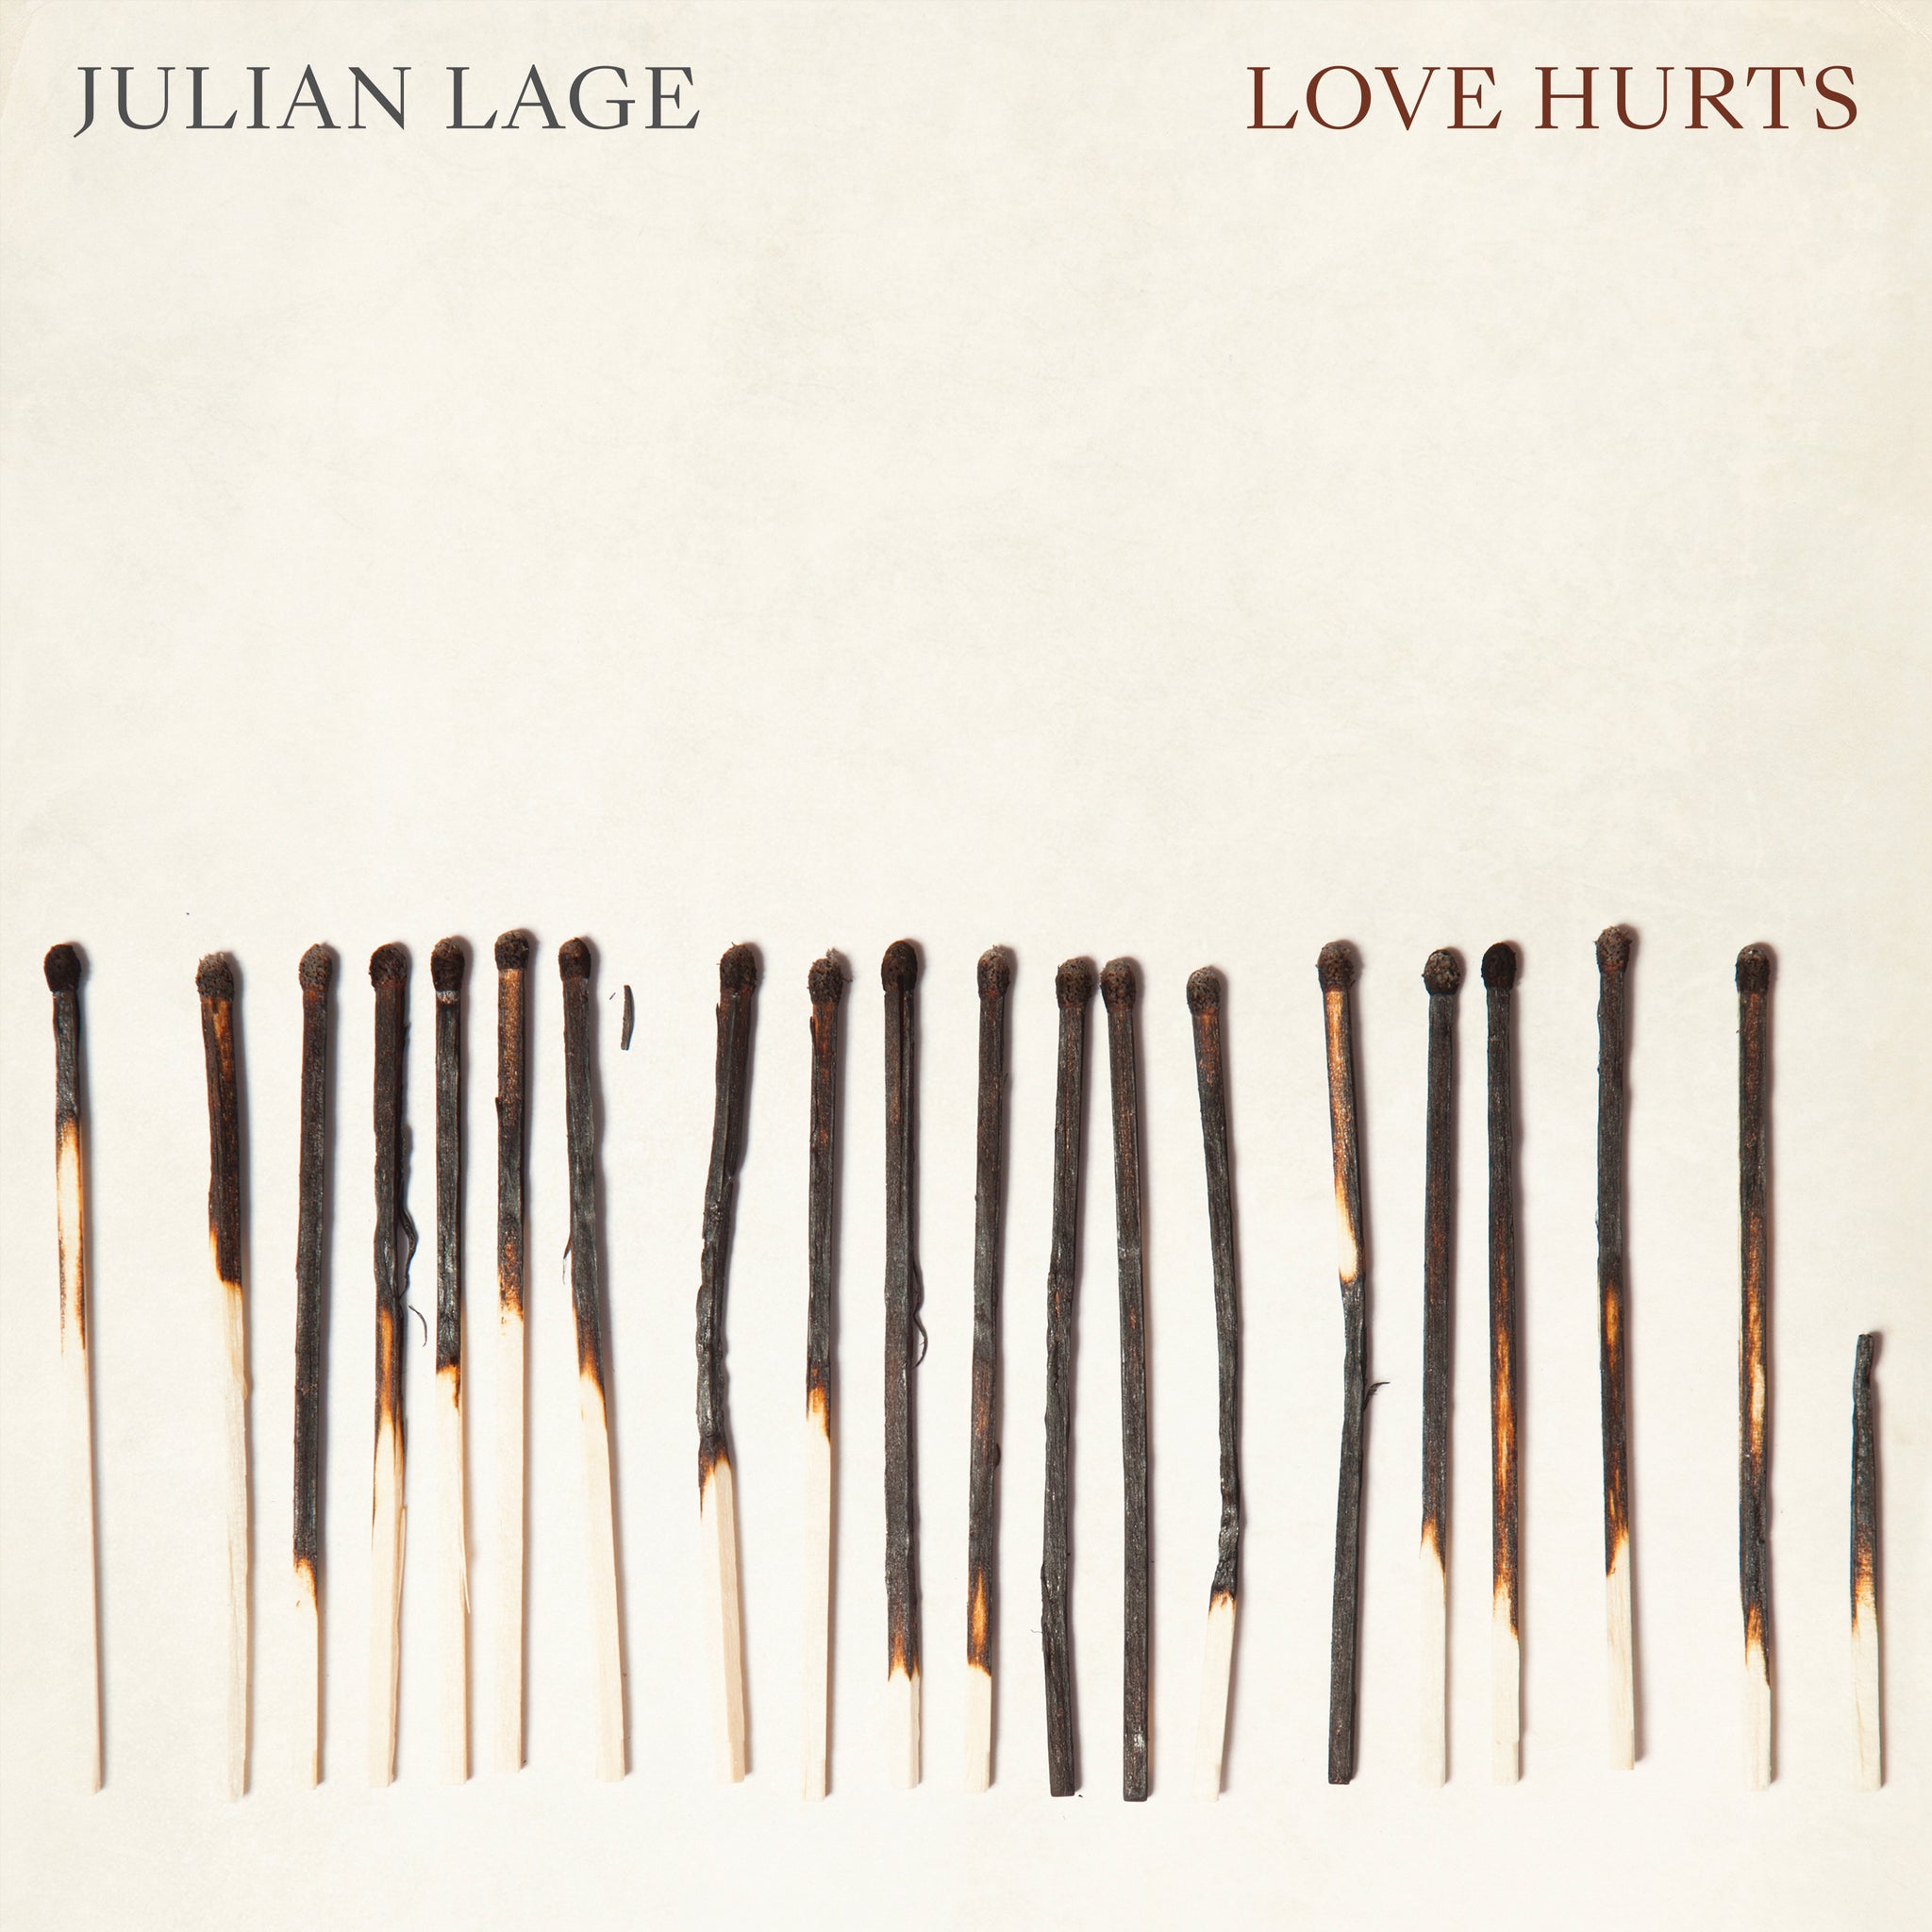 Love Hurts / Julian Lage